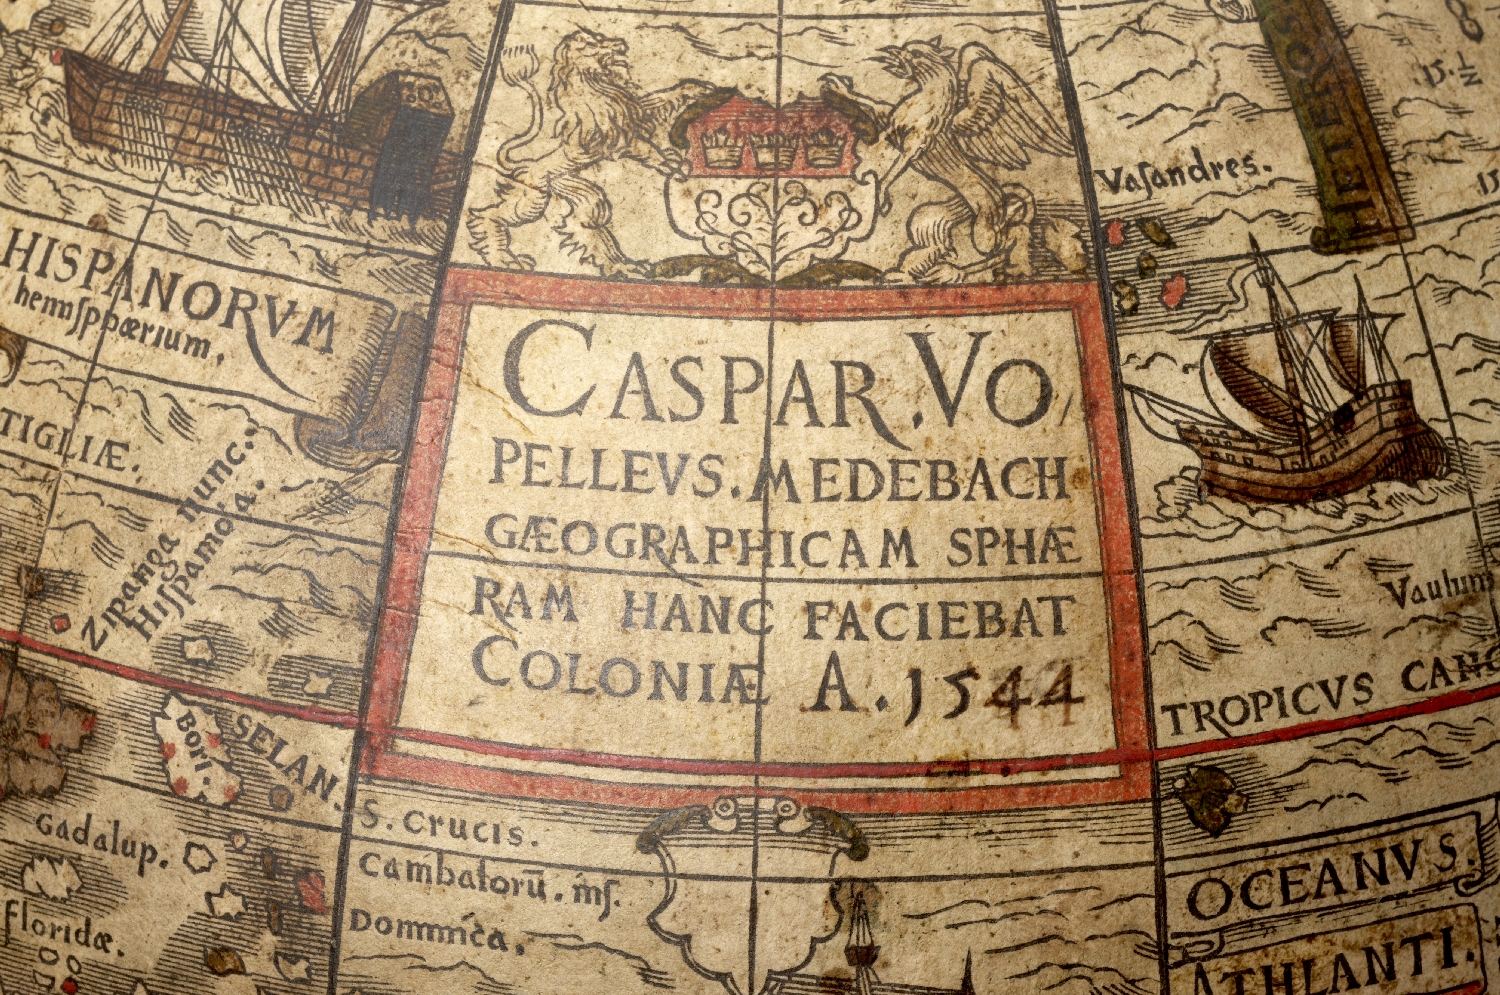 World globe, Caspar Vopelius, Cologne, 1544, cardboard, plaster, copper engraving on paper, wood, inv. no. K 1630-49